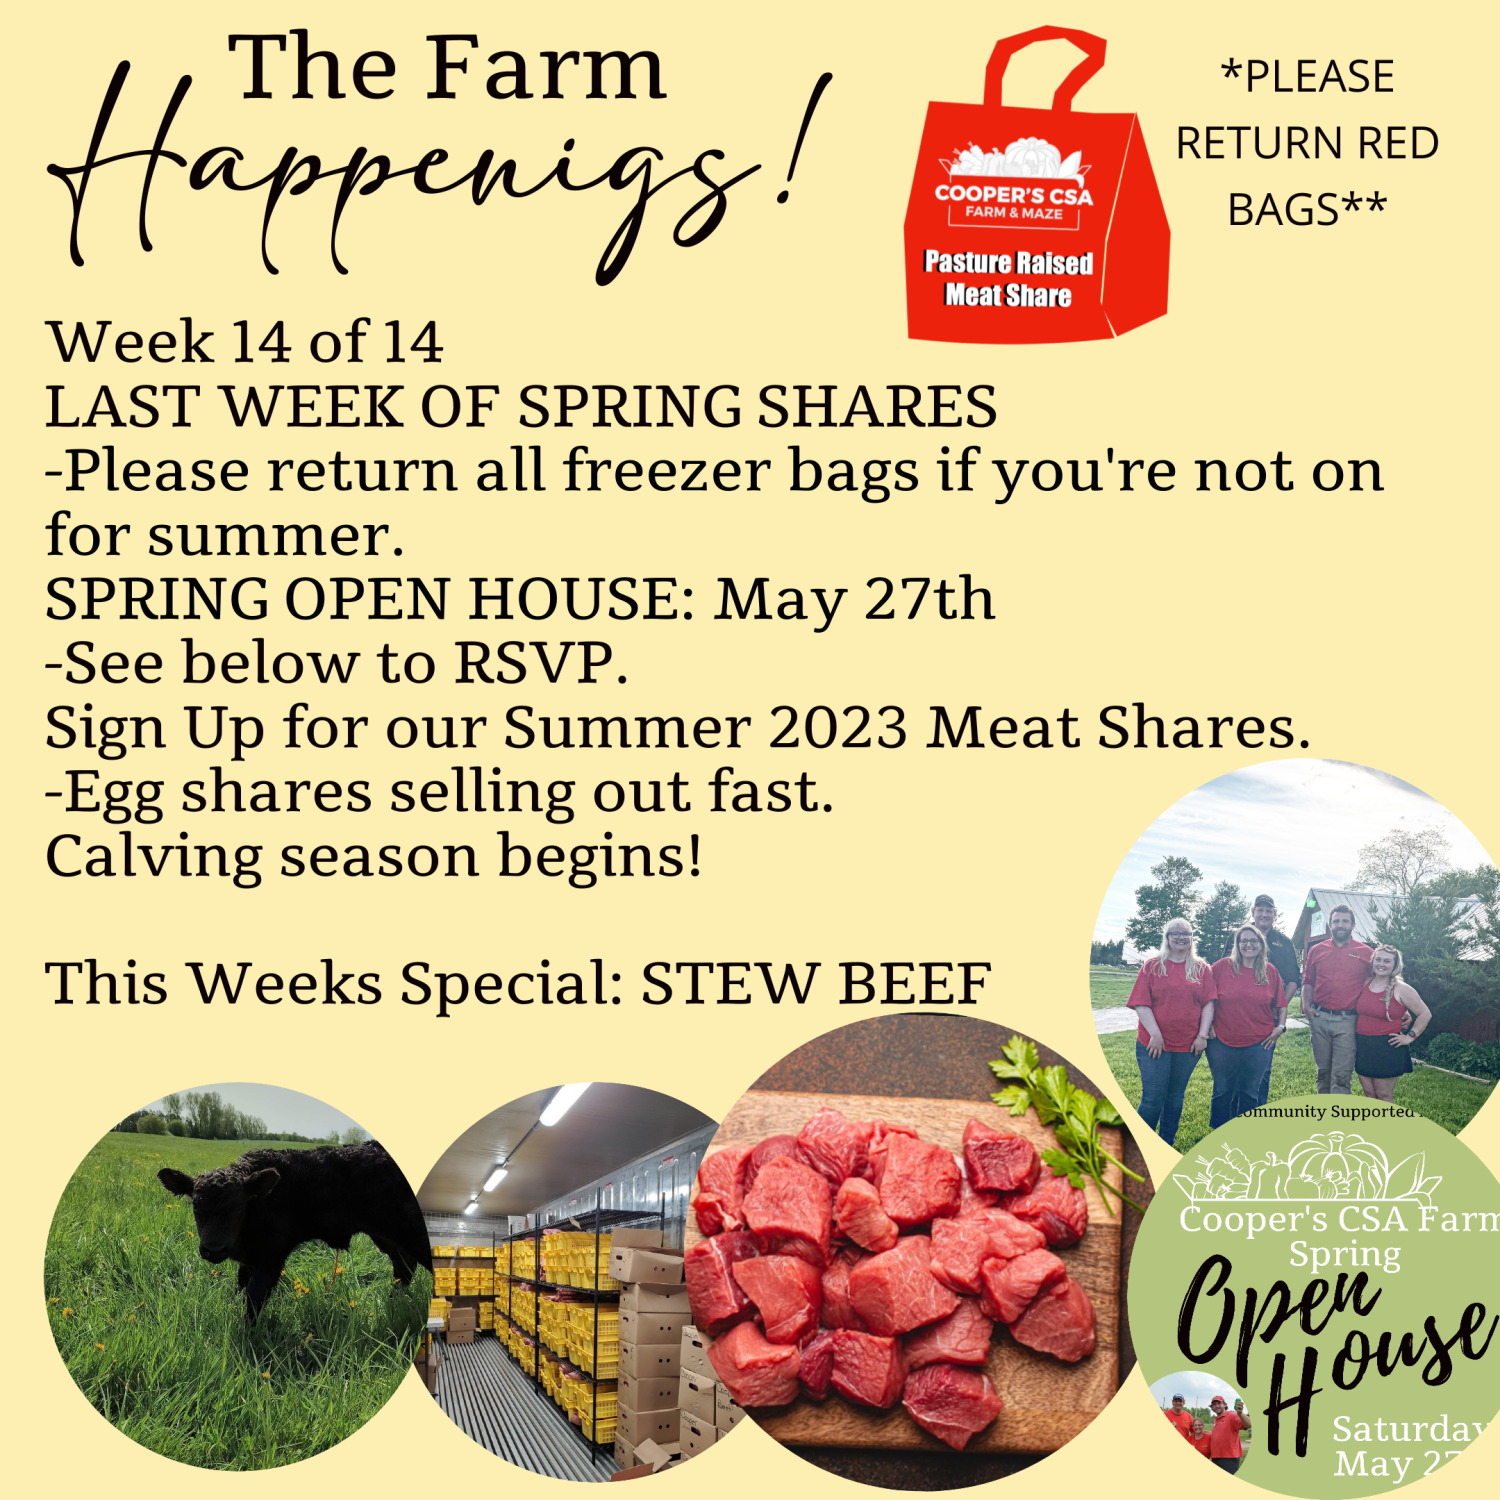 Next Happening: "Pasture Meat Shares"-Coopers CSA Farm Farm Happenings Week 14